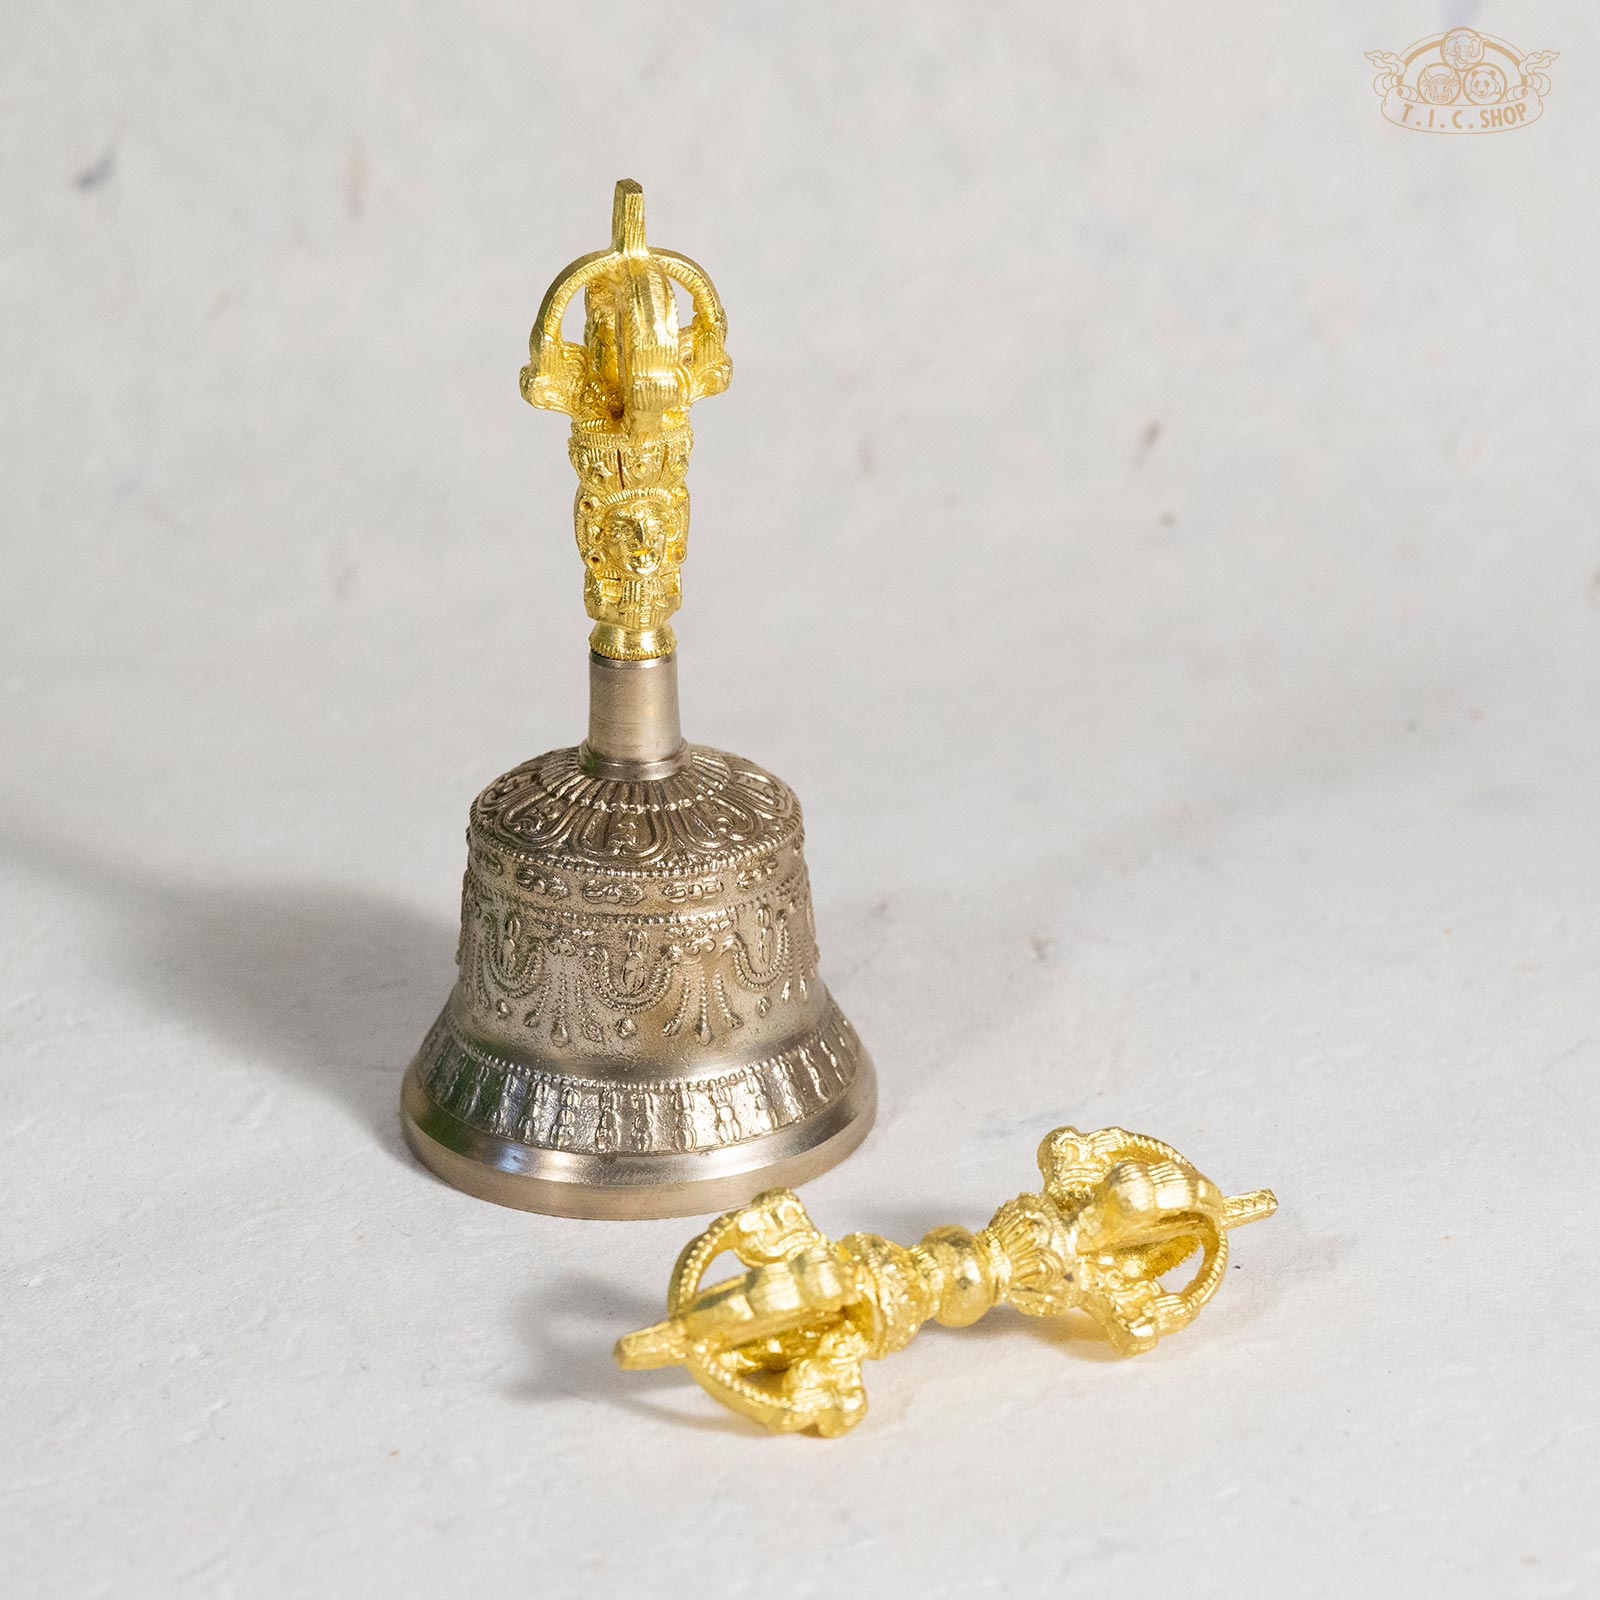 Tibetan bell & dorjee - Small size